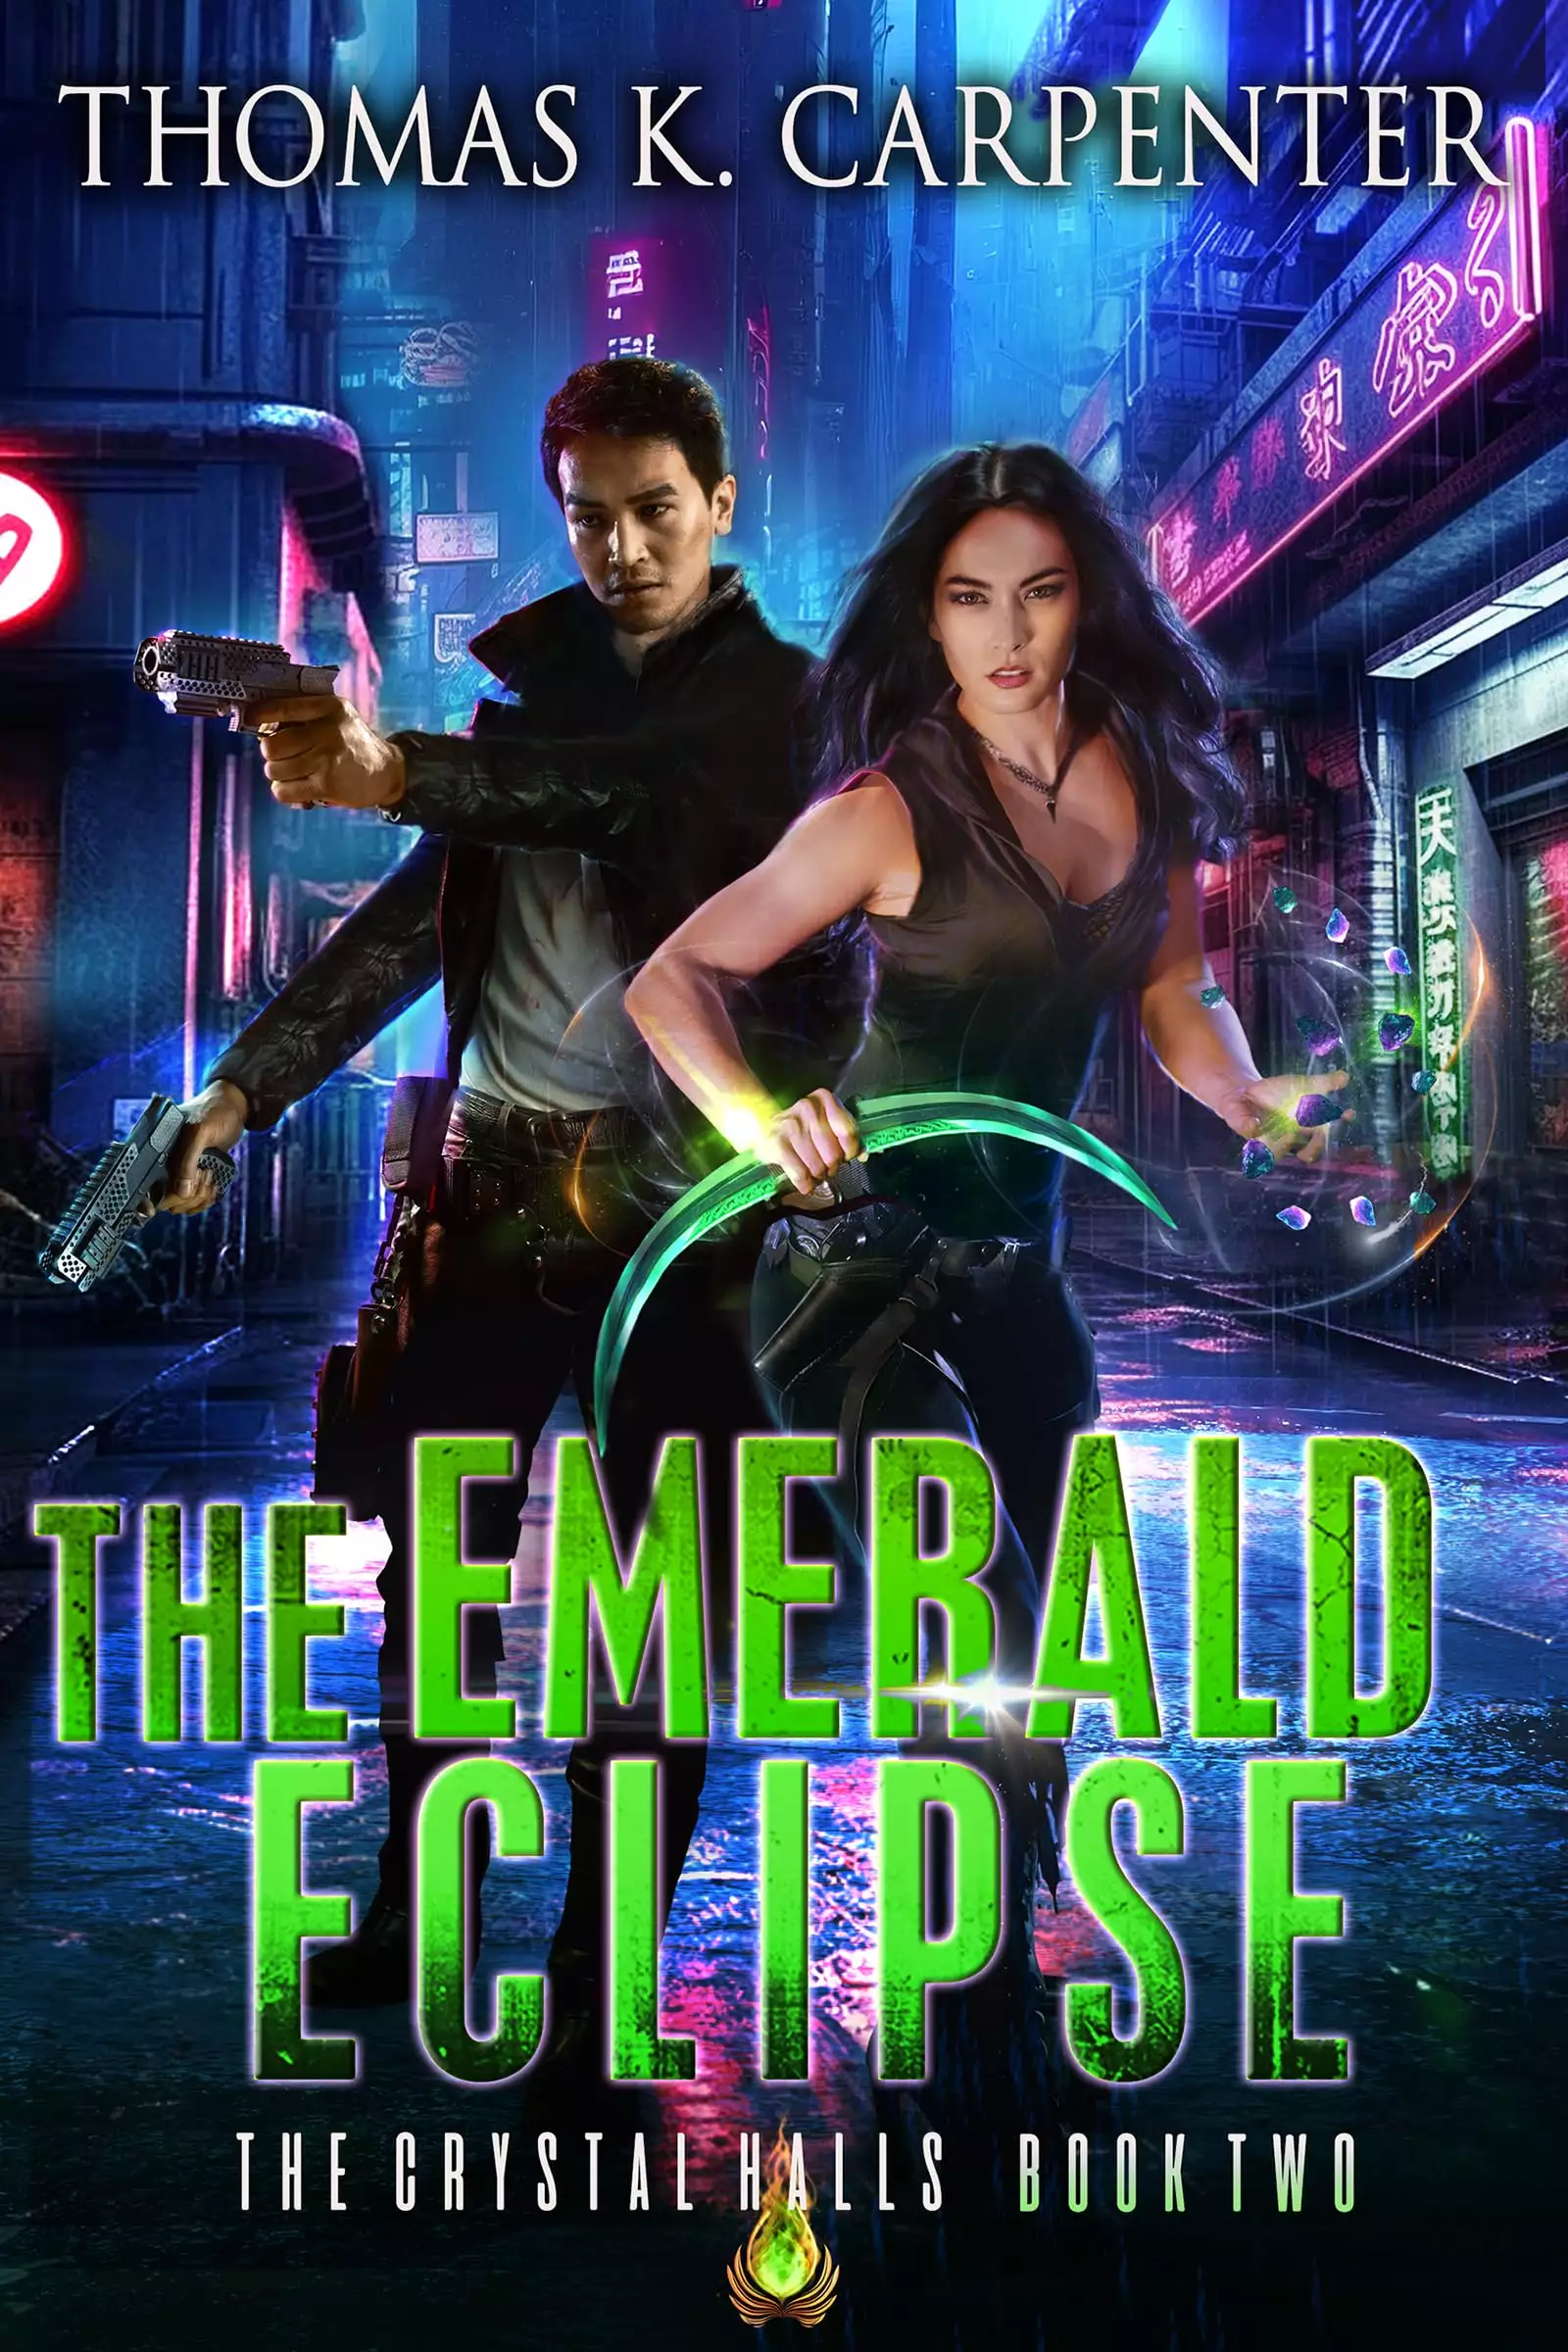 The Emerald Eclipse